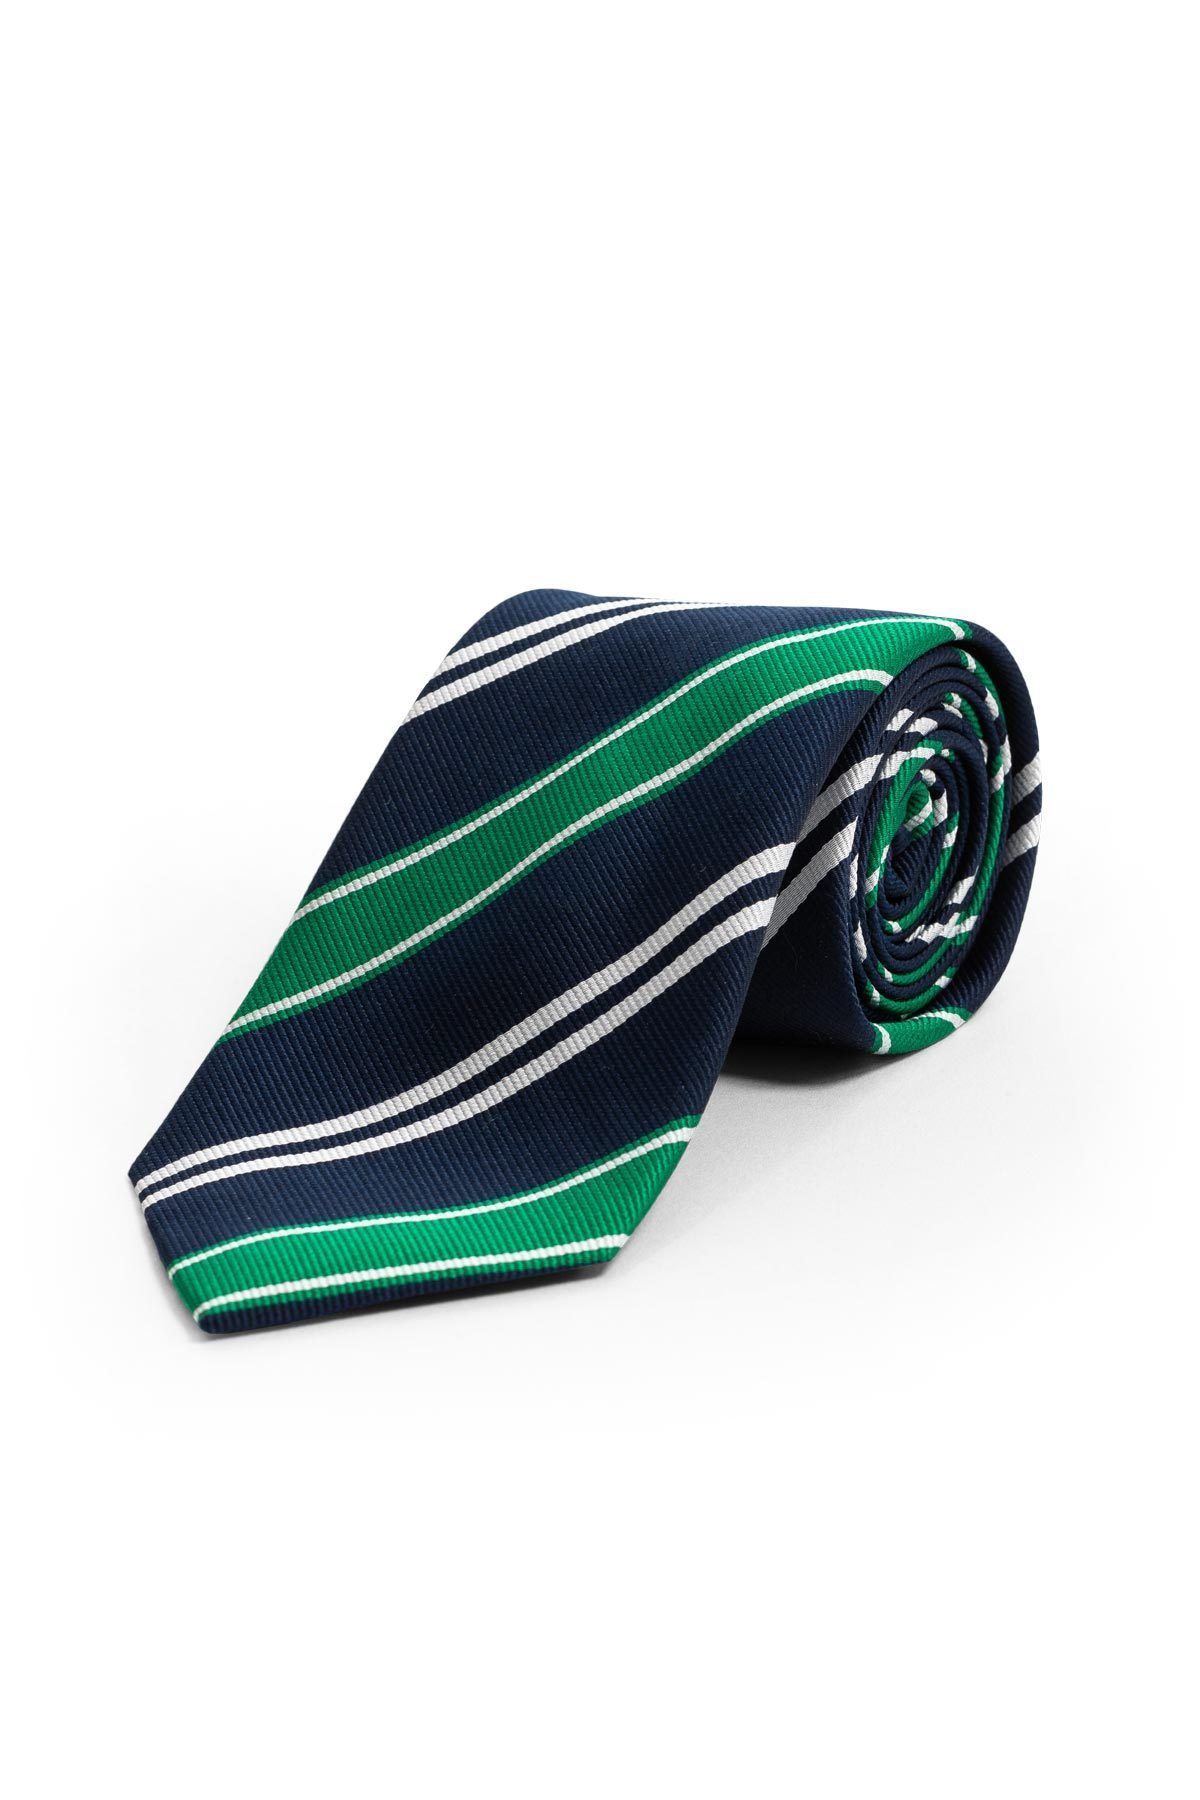 An ivy Slips Navy Green Club Tie